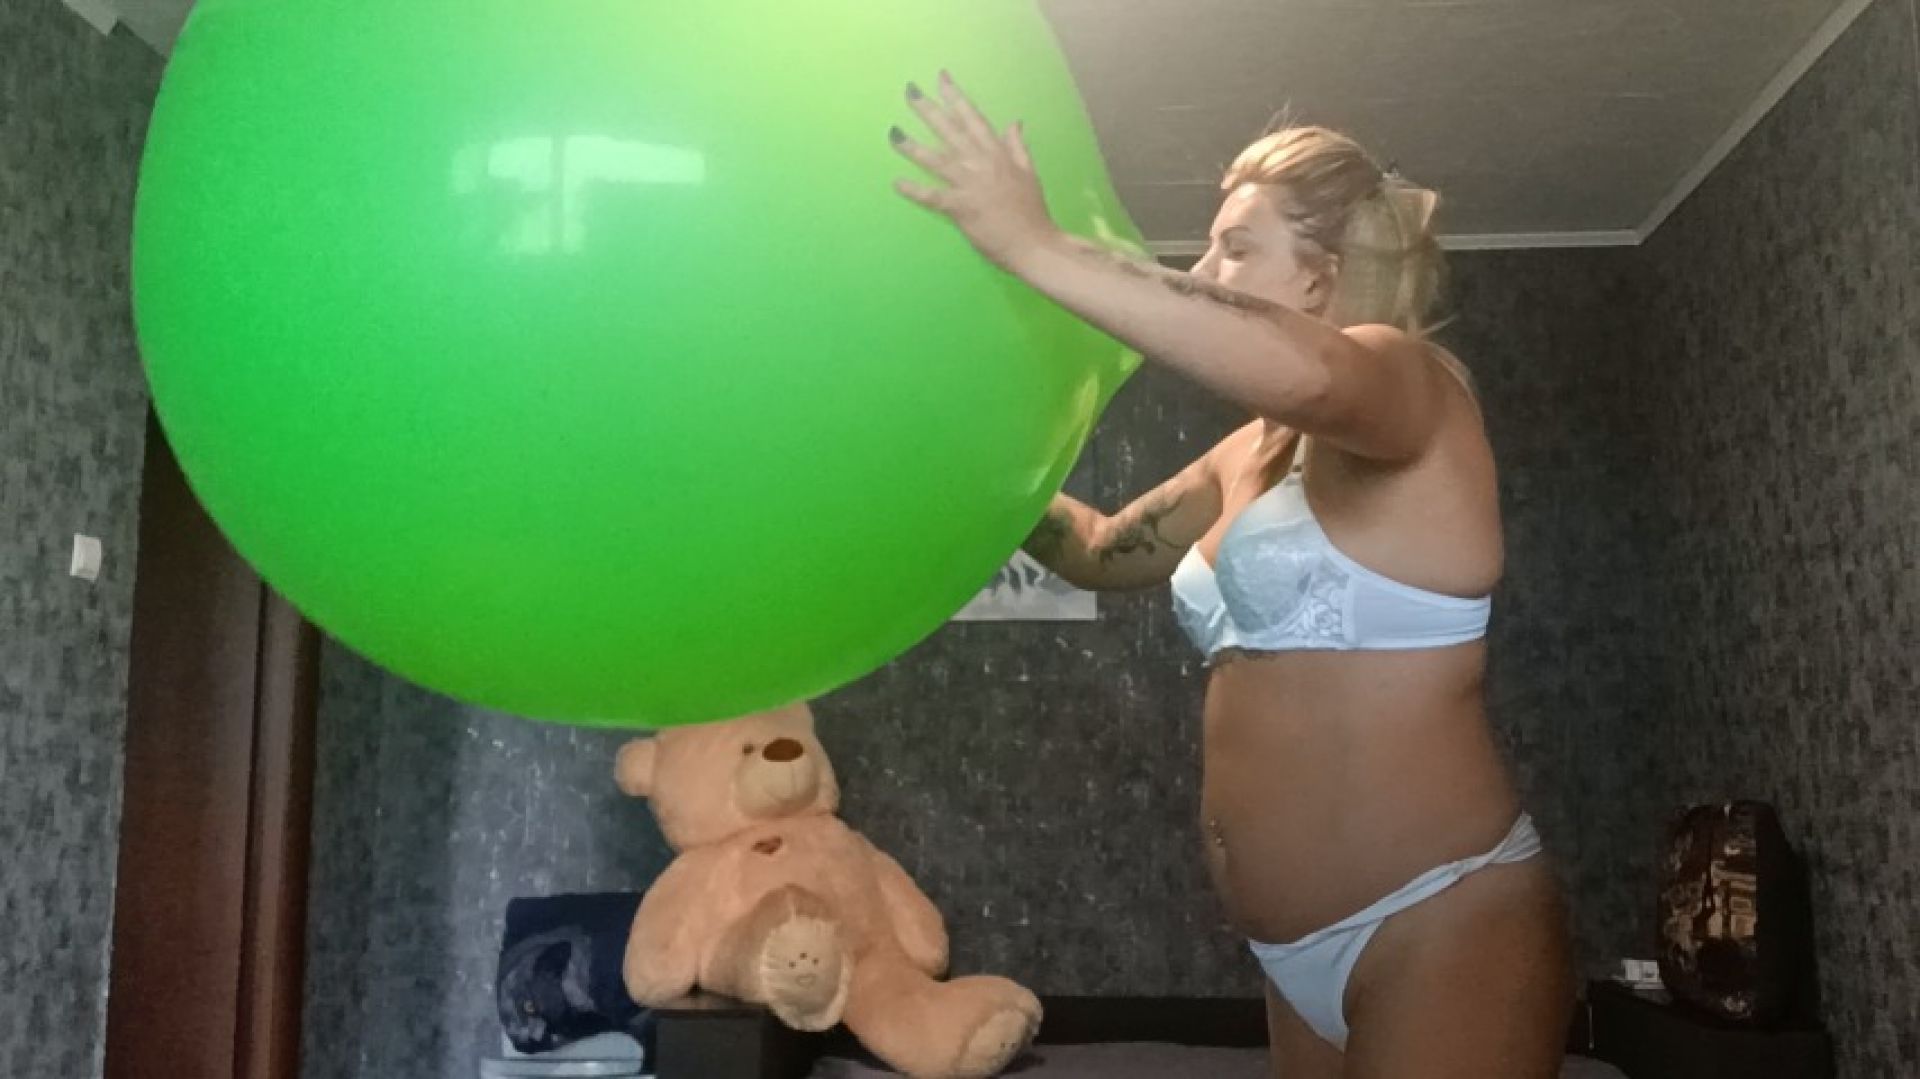 hotgirl blow giant balloon